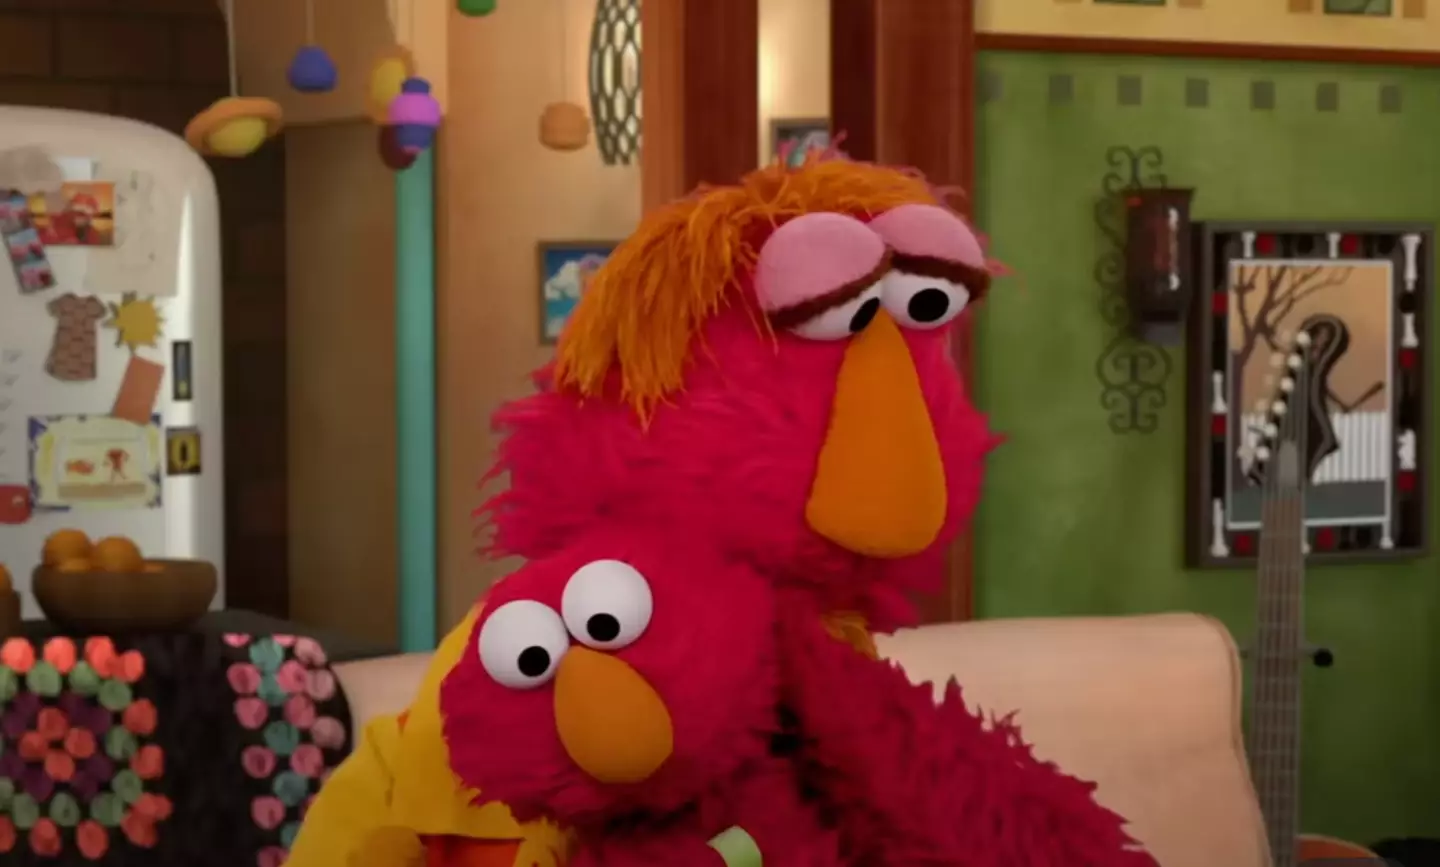 The Sesame Street episode showed Elmo receiving the Covid-19 vaccine.